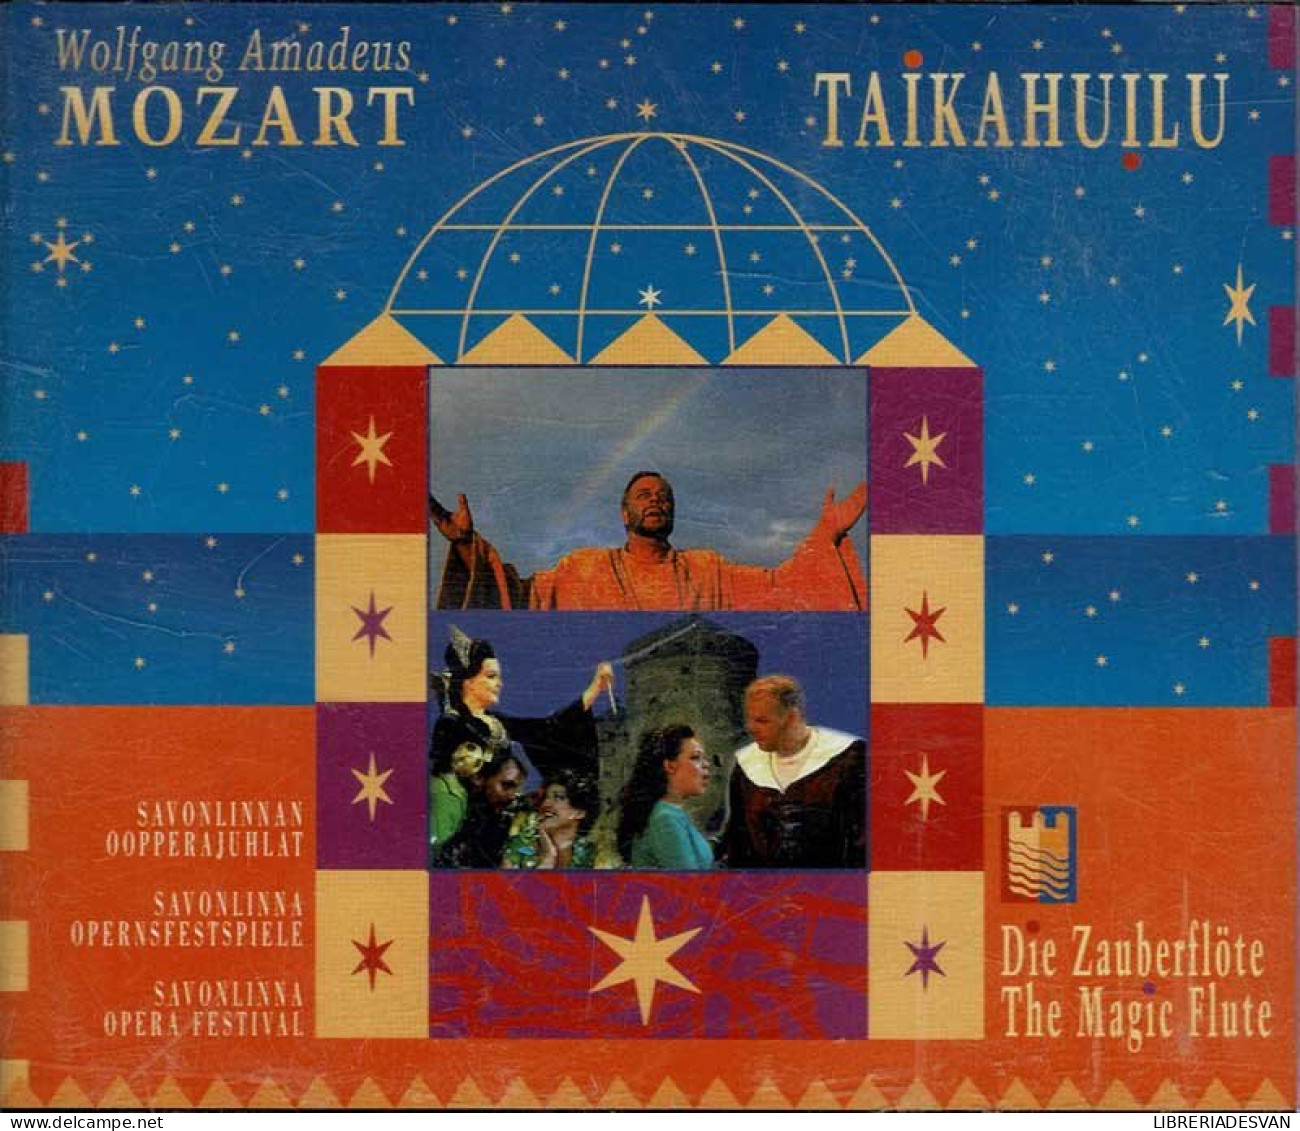 Wolfgang Amadeus Mozart - Taikahuilu. Die Zauberflöte. The Magic Flute. 2 X CD - Classical